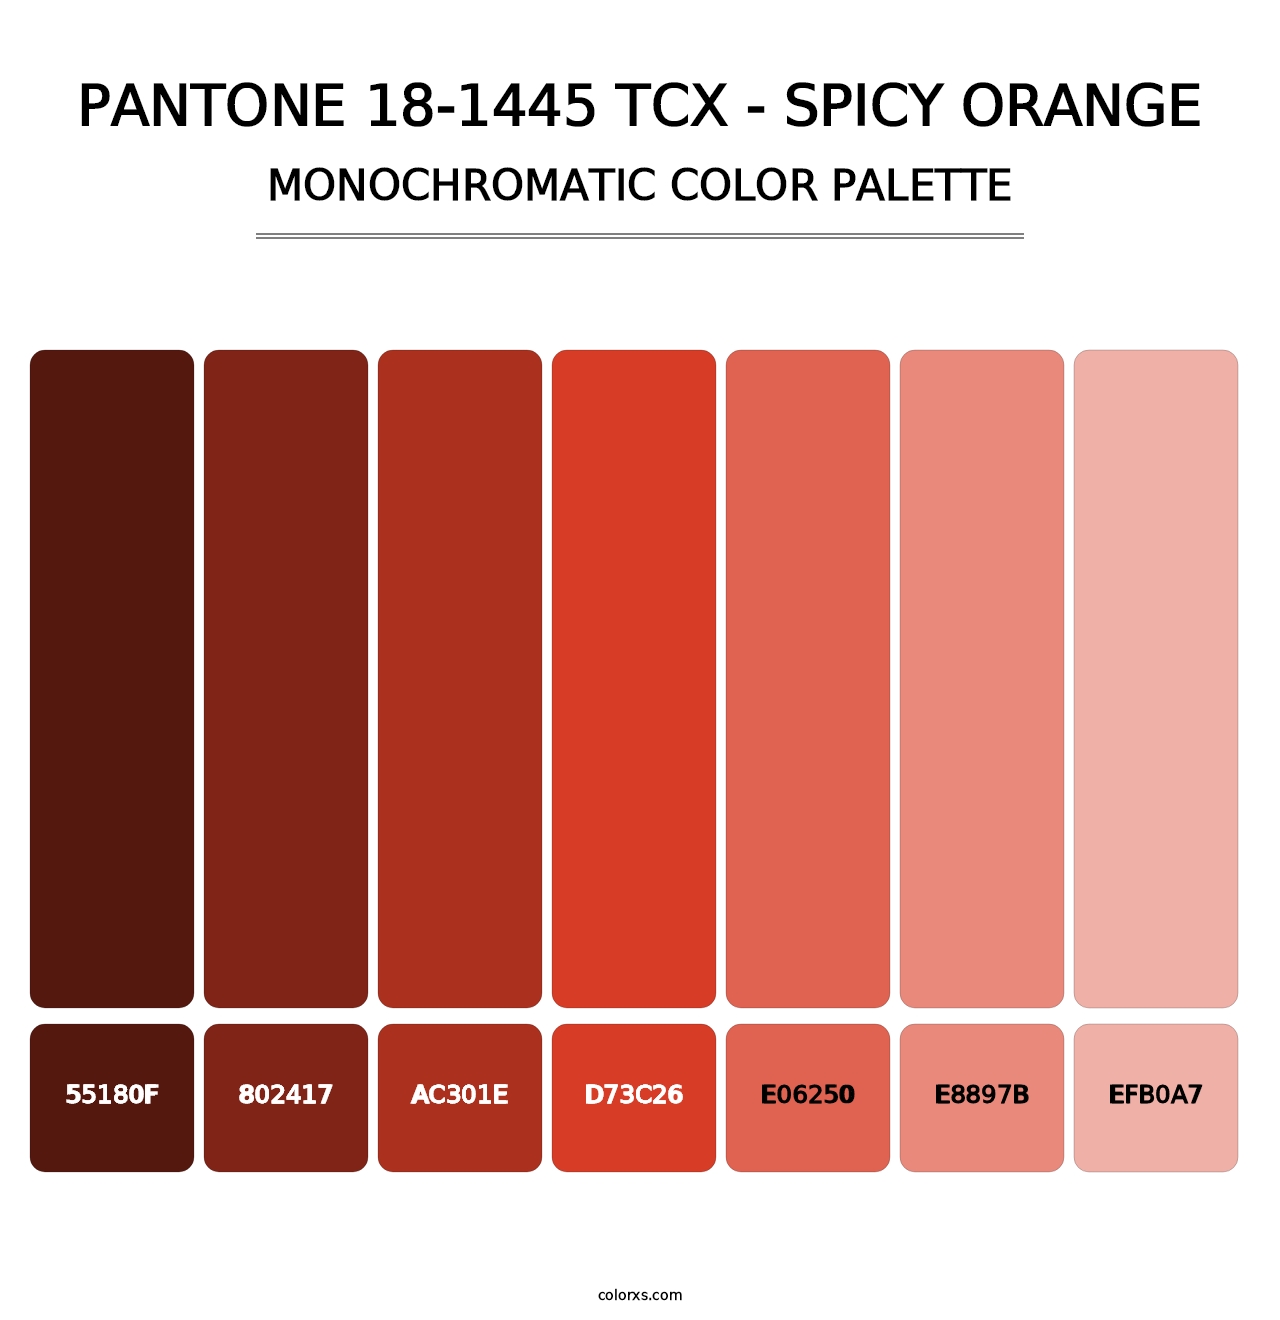 PANTONE 18-1445 TCX - Spicy Orange - Monochromatic Color Palette